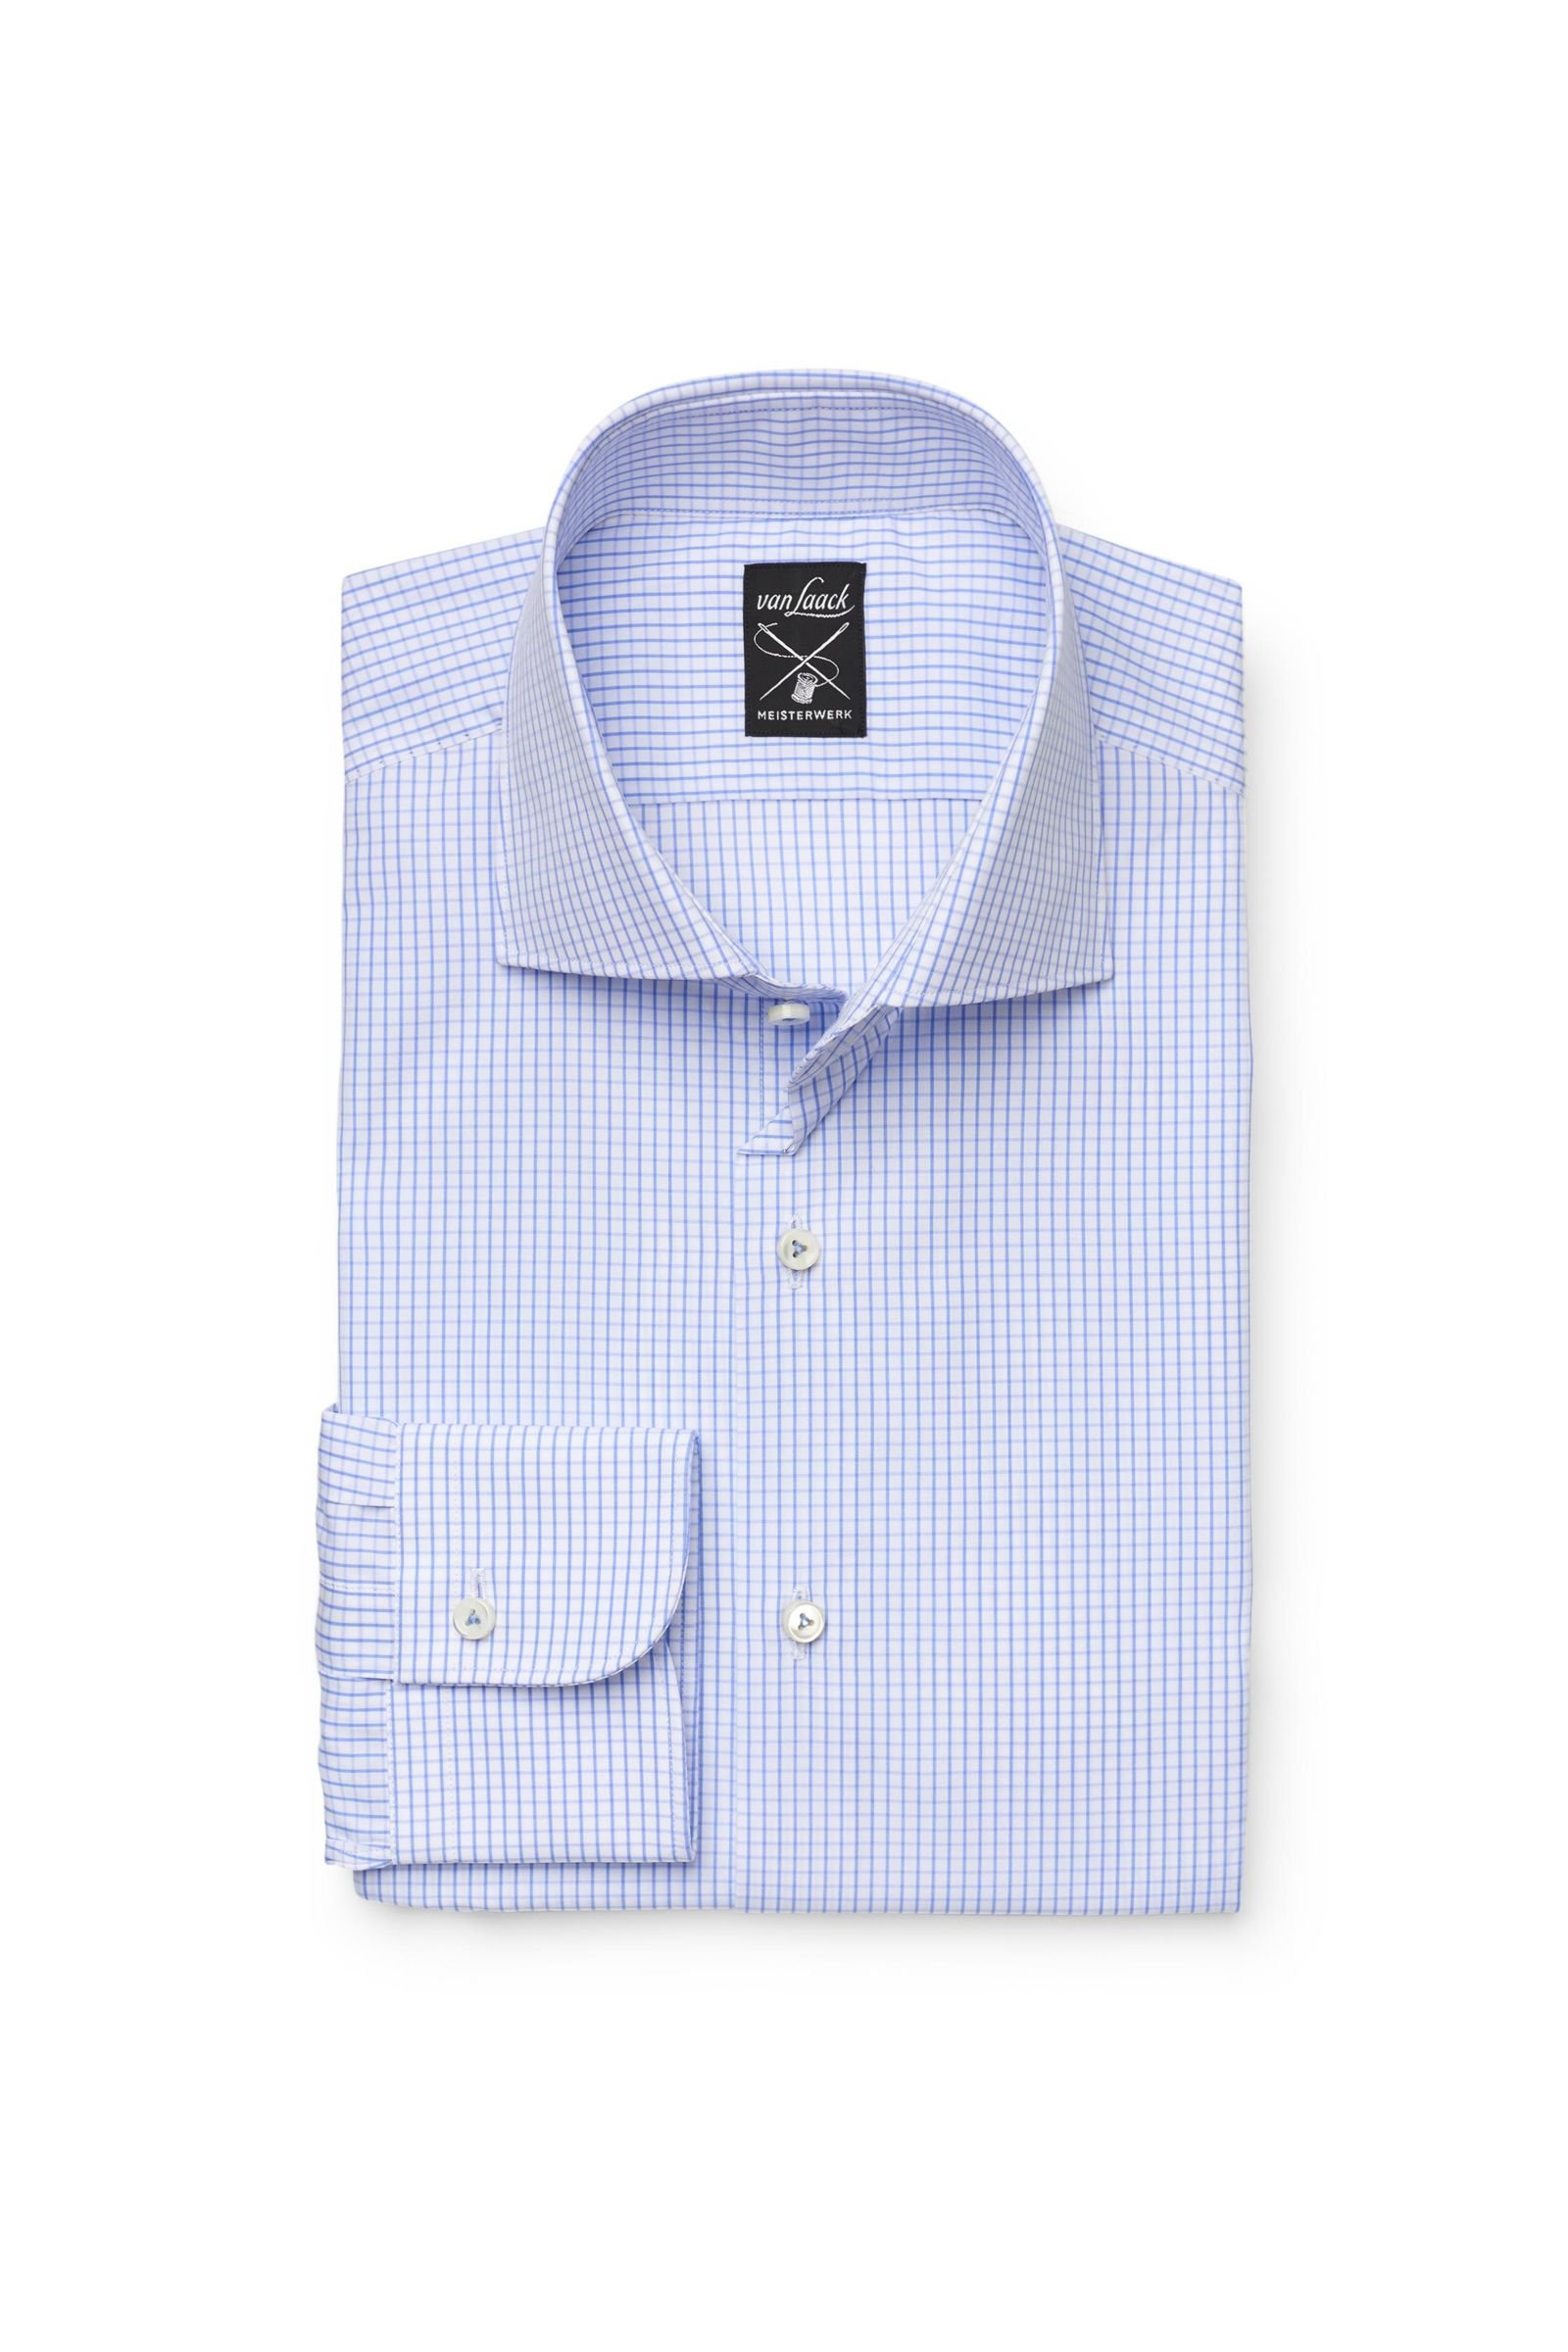 Business shirt 'Mivara Tailor Fit' shark collar white/blue checked